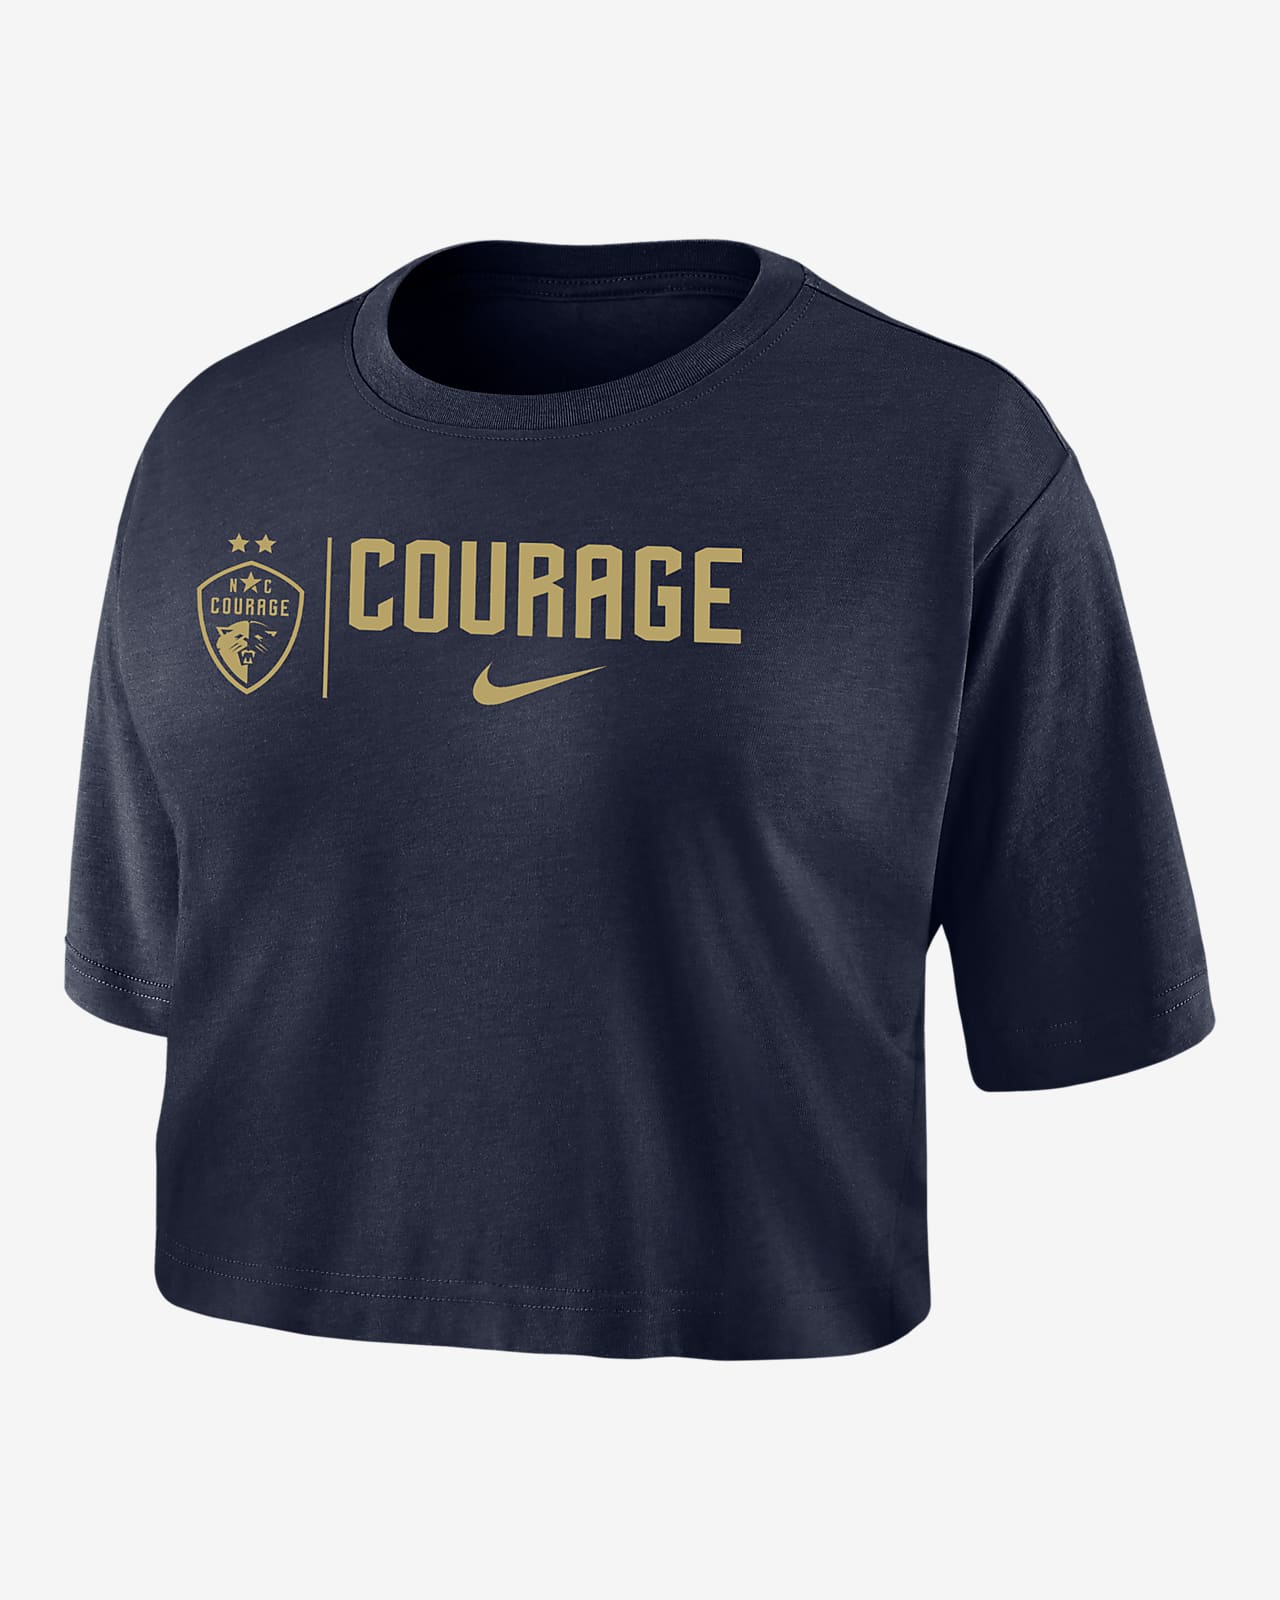 North Carolina Courage Women's Nike Dri-FIT Soccer Cropped T-Shirt